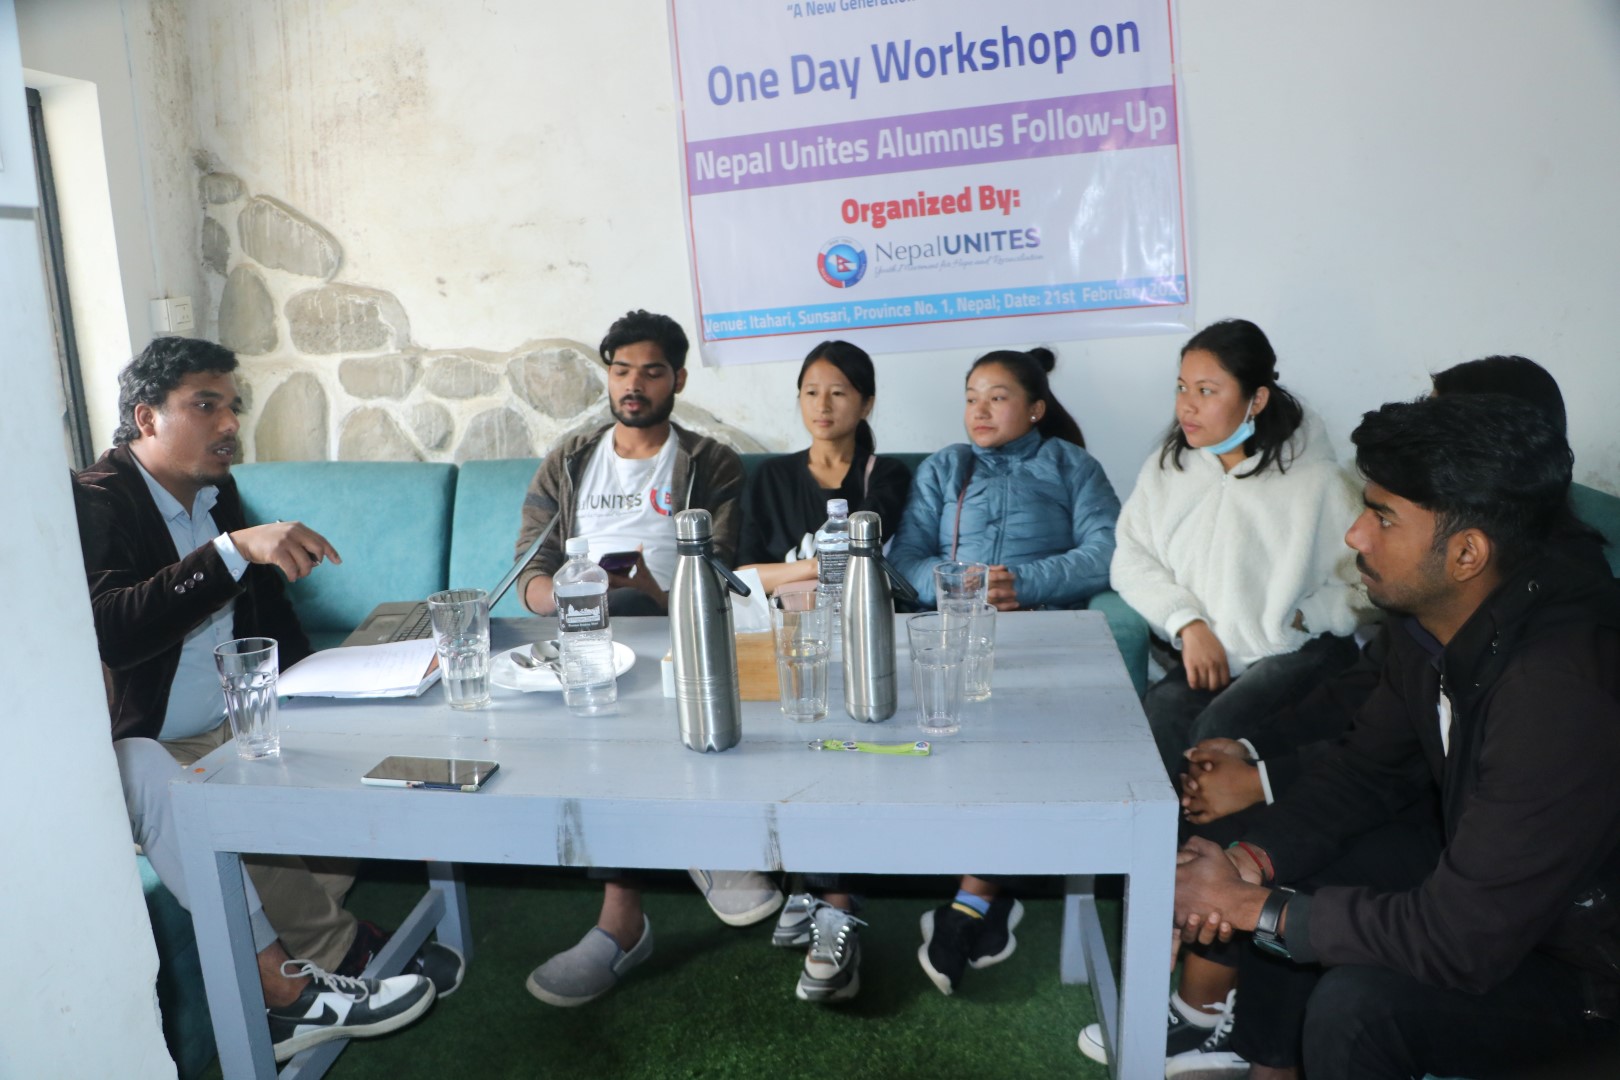 Nepal Unites Alumnus Follow-Up Workshop